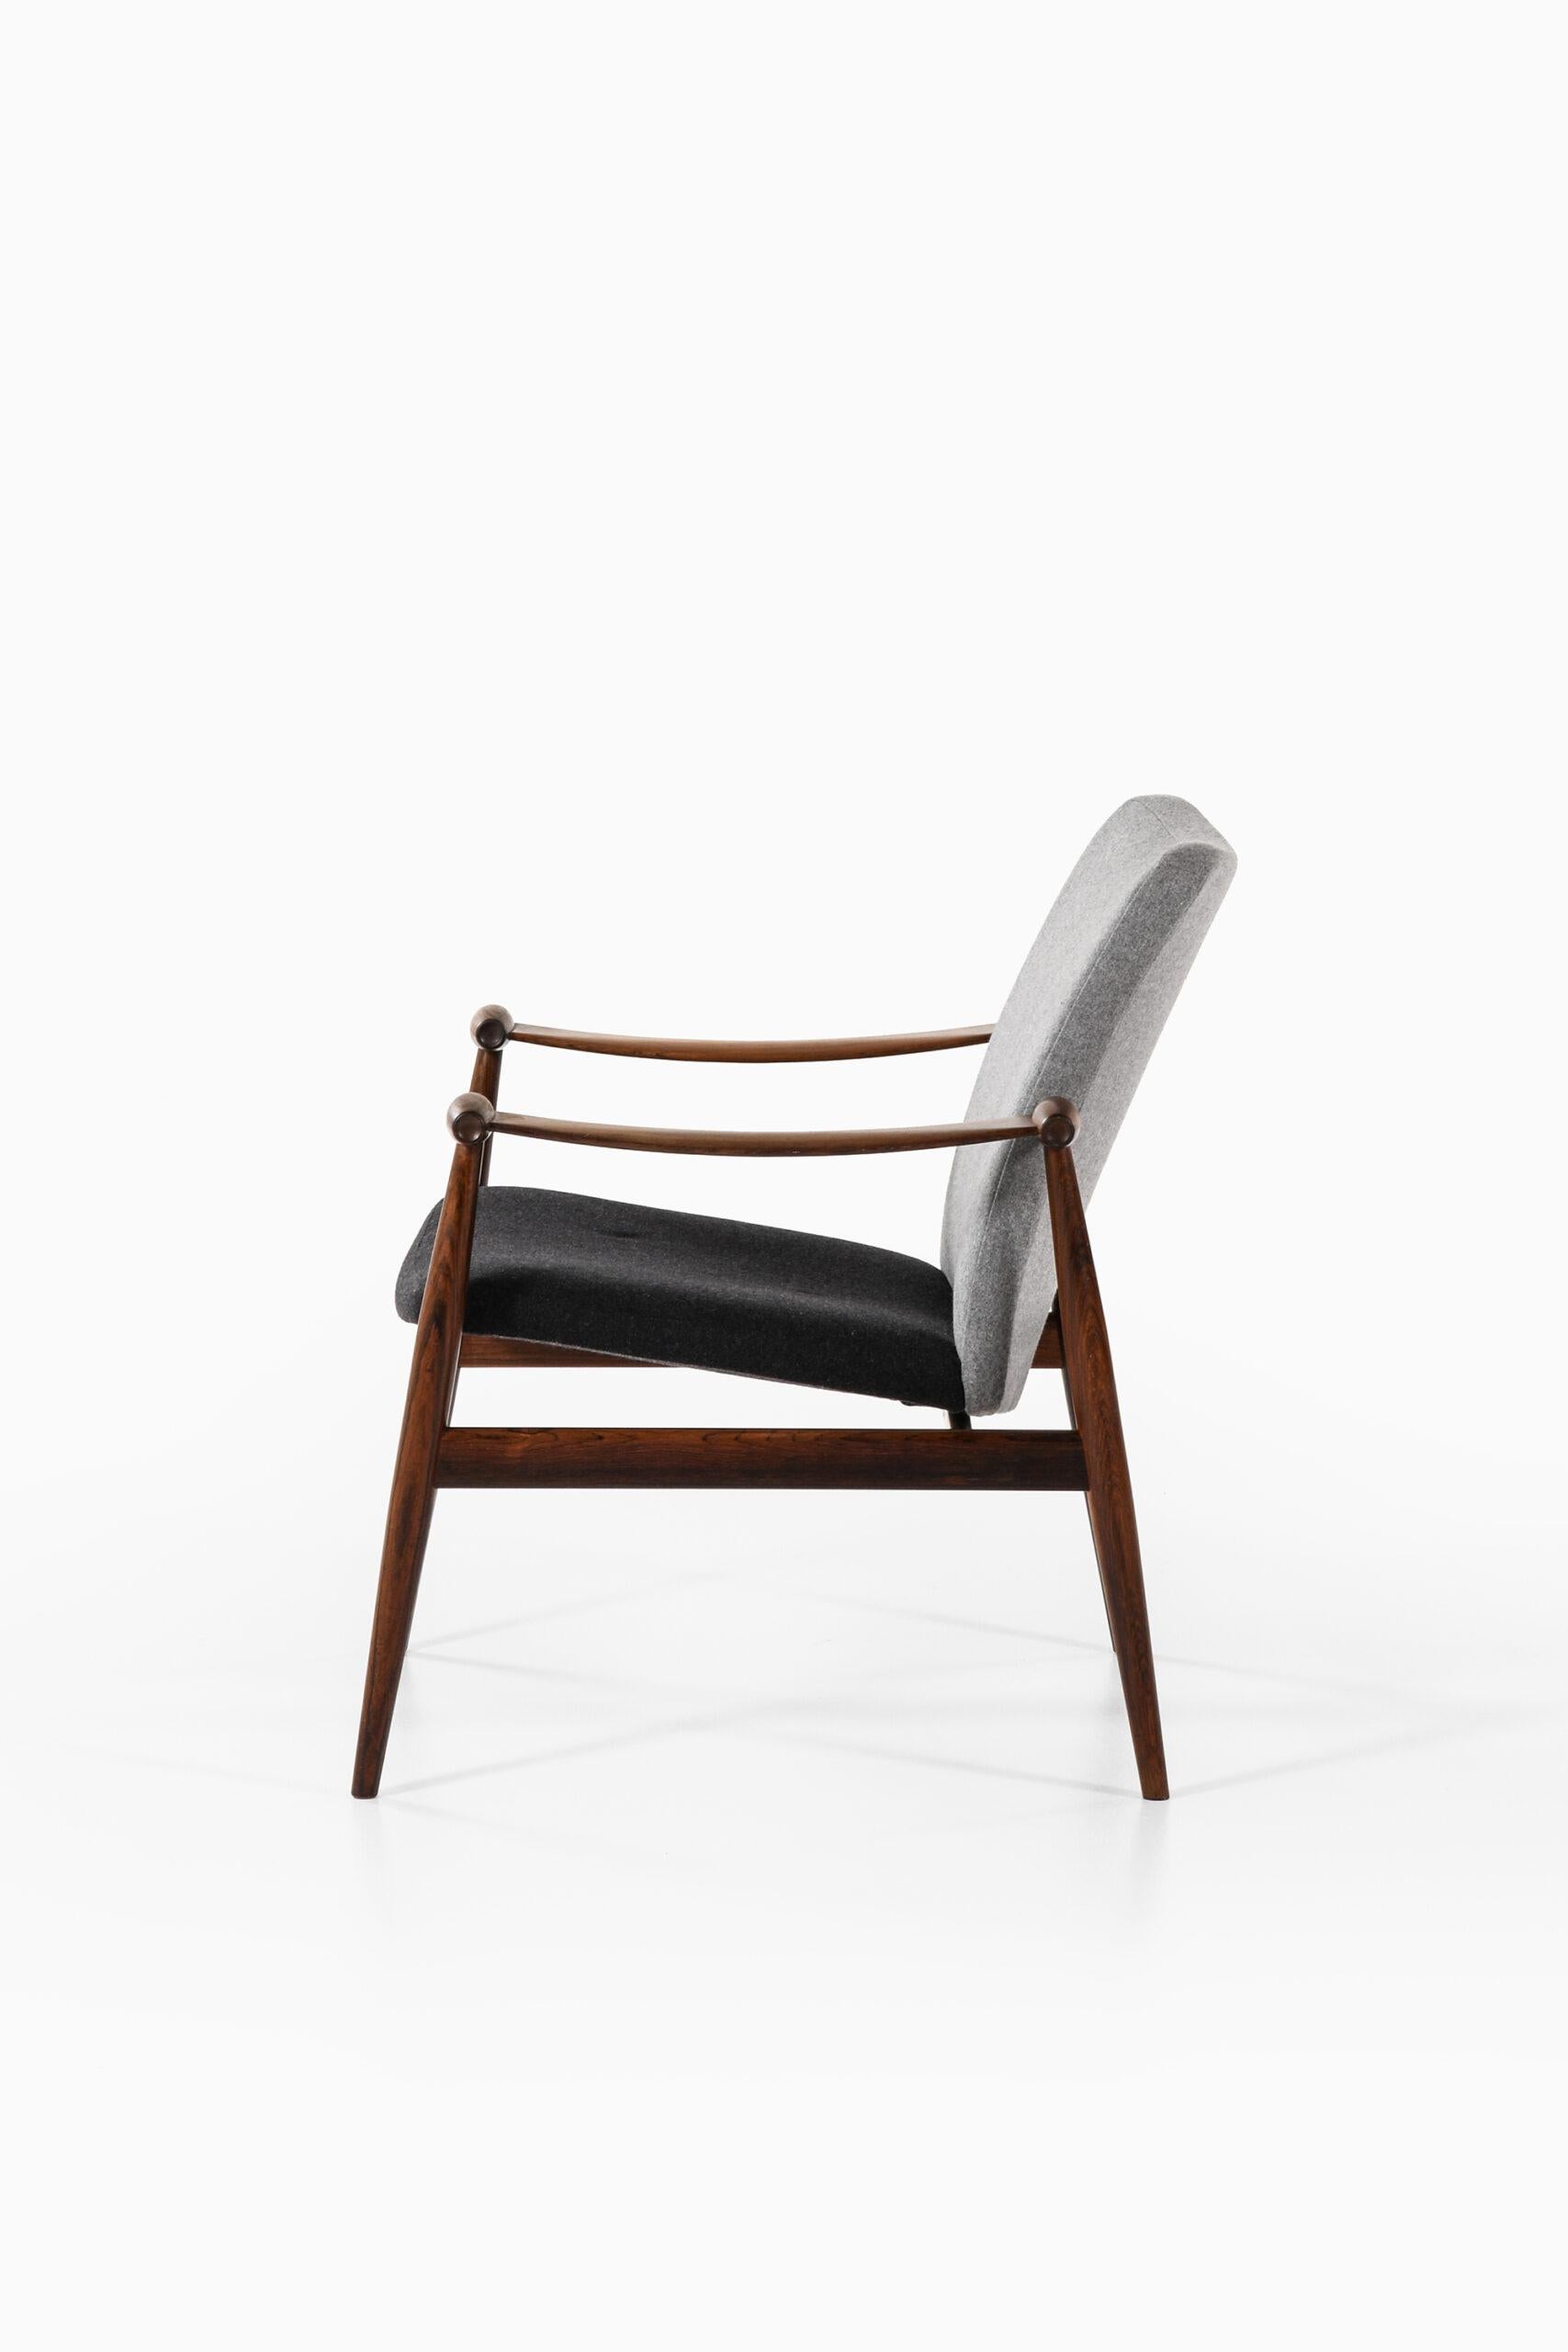 Fabric Finn Juhl Easy Chair Model 'Spade' Produced by France & Son For Sale